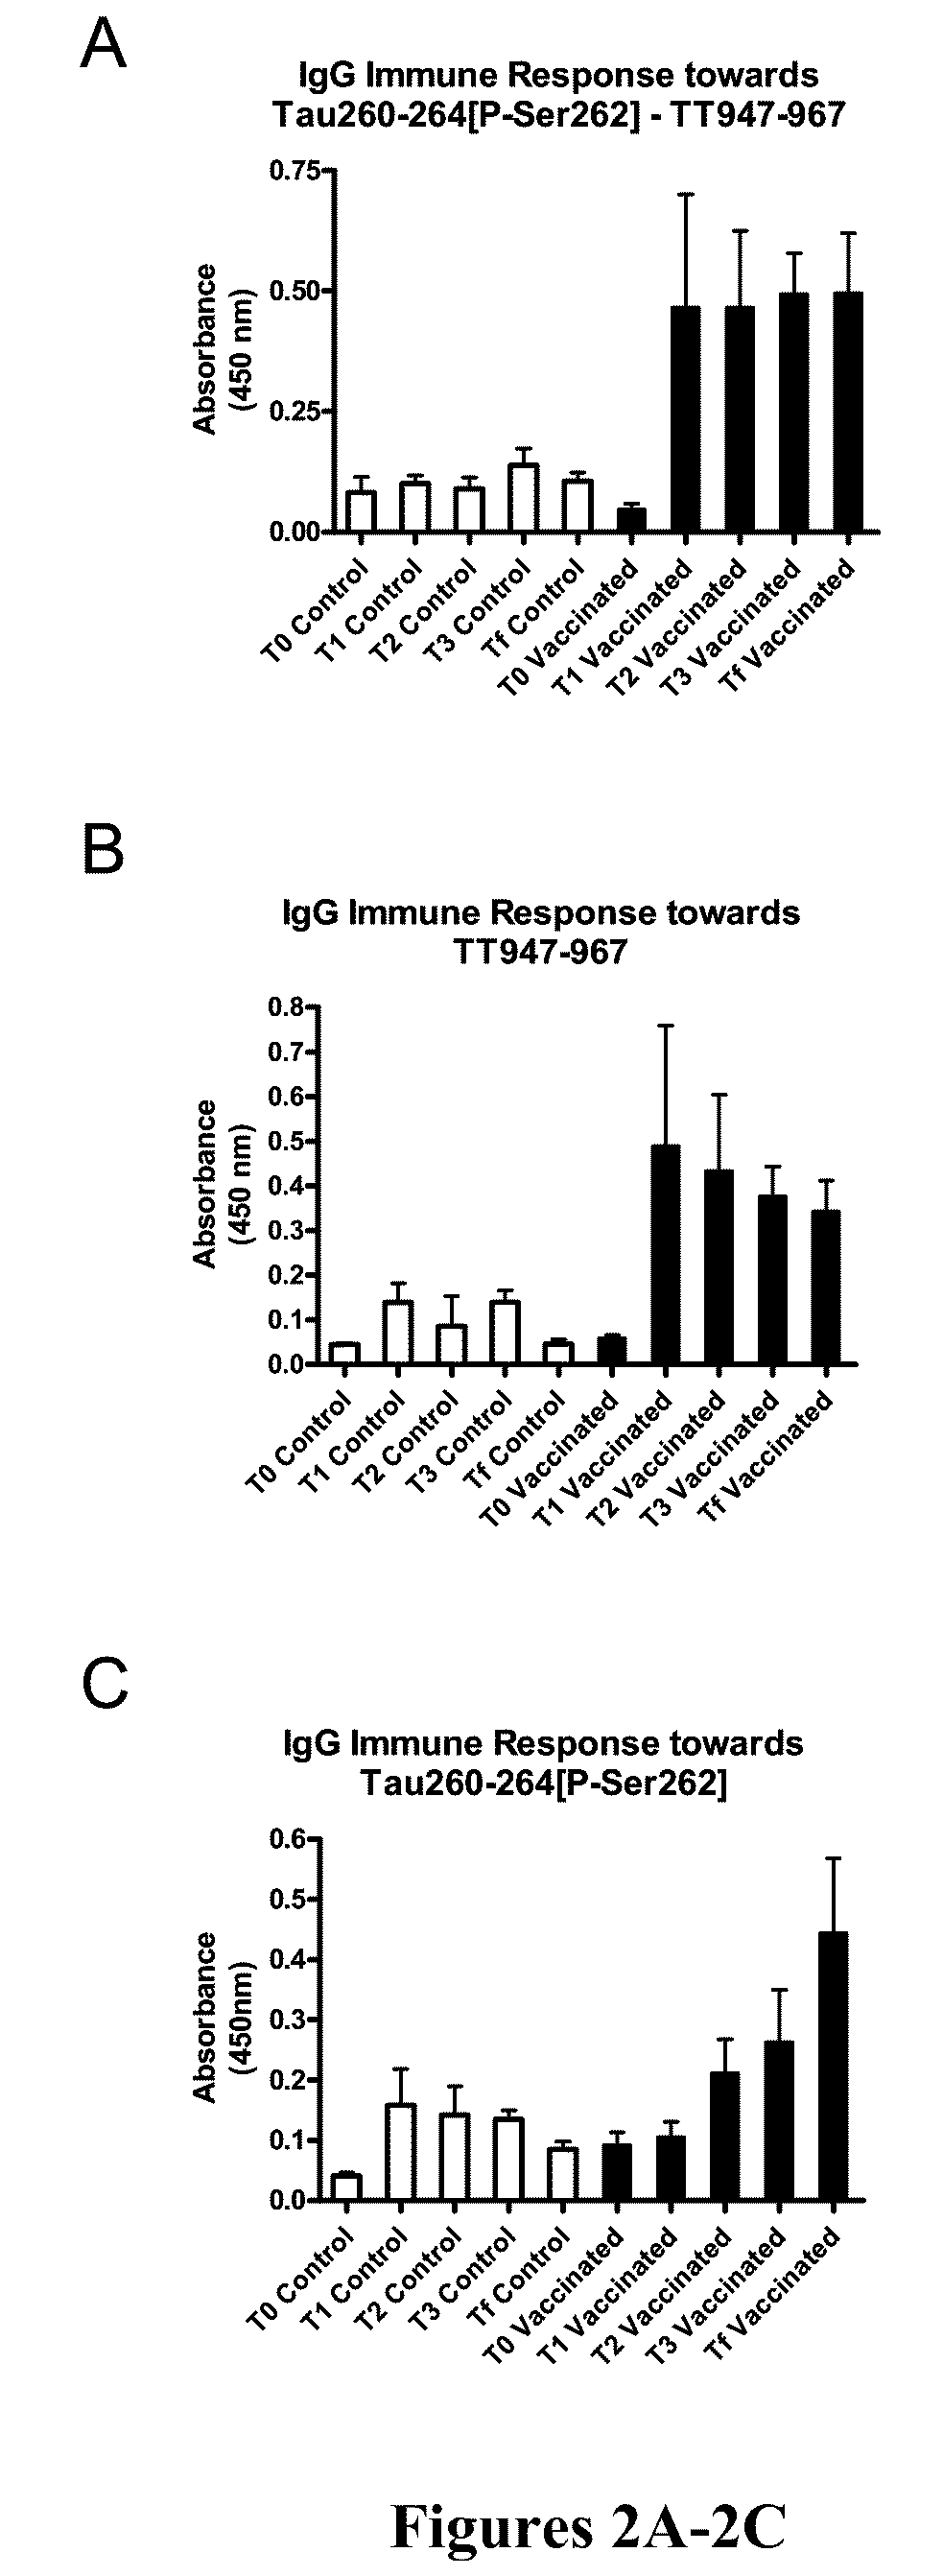 Immunological targeting of pathological Tau proteins